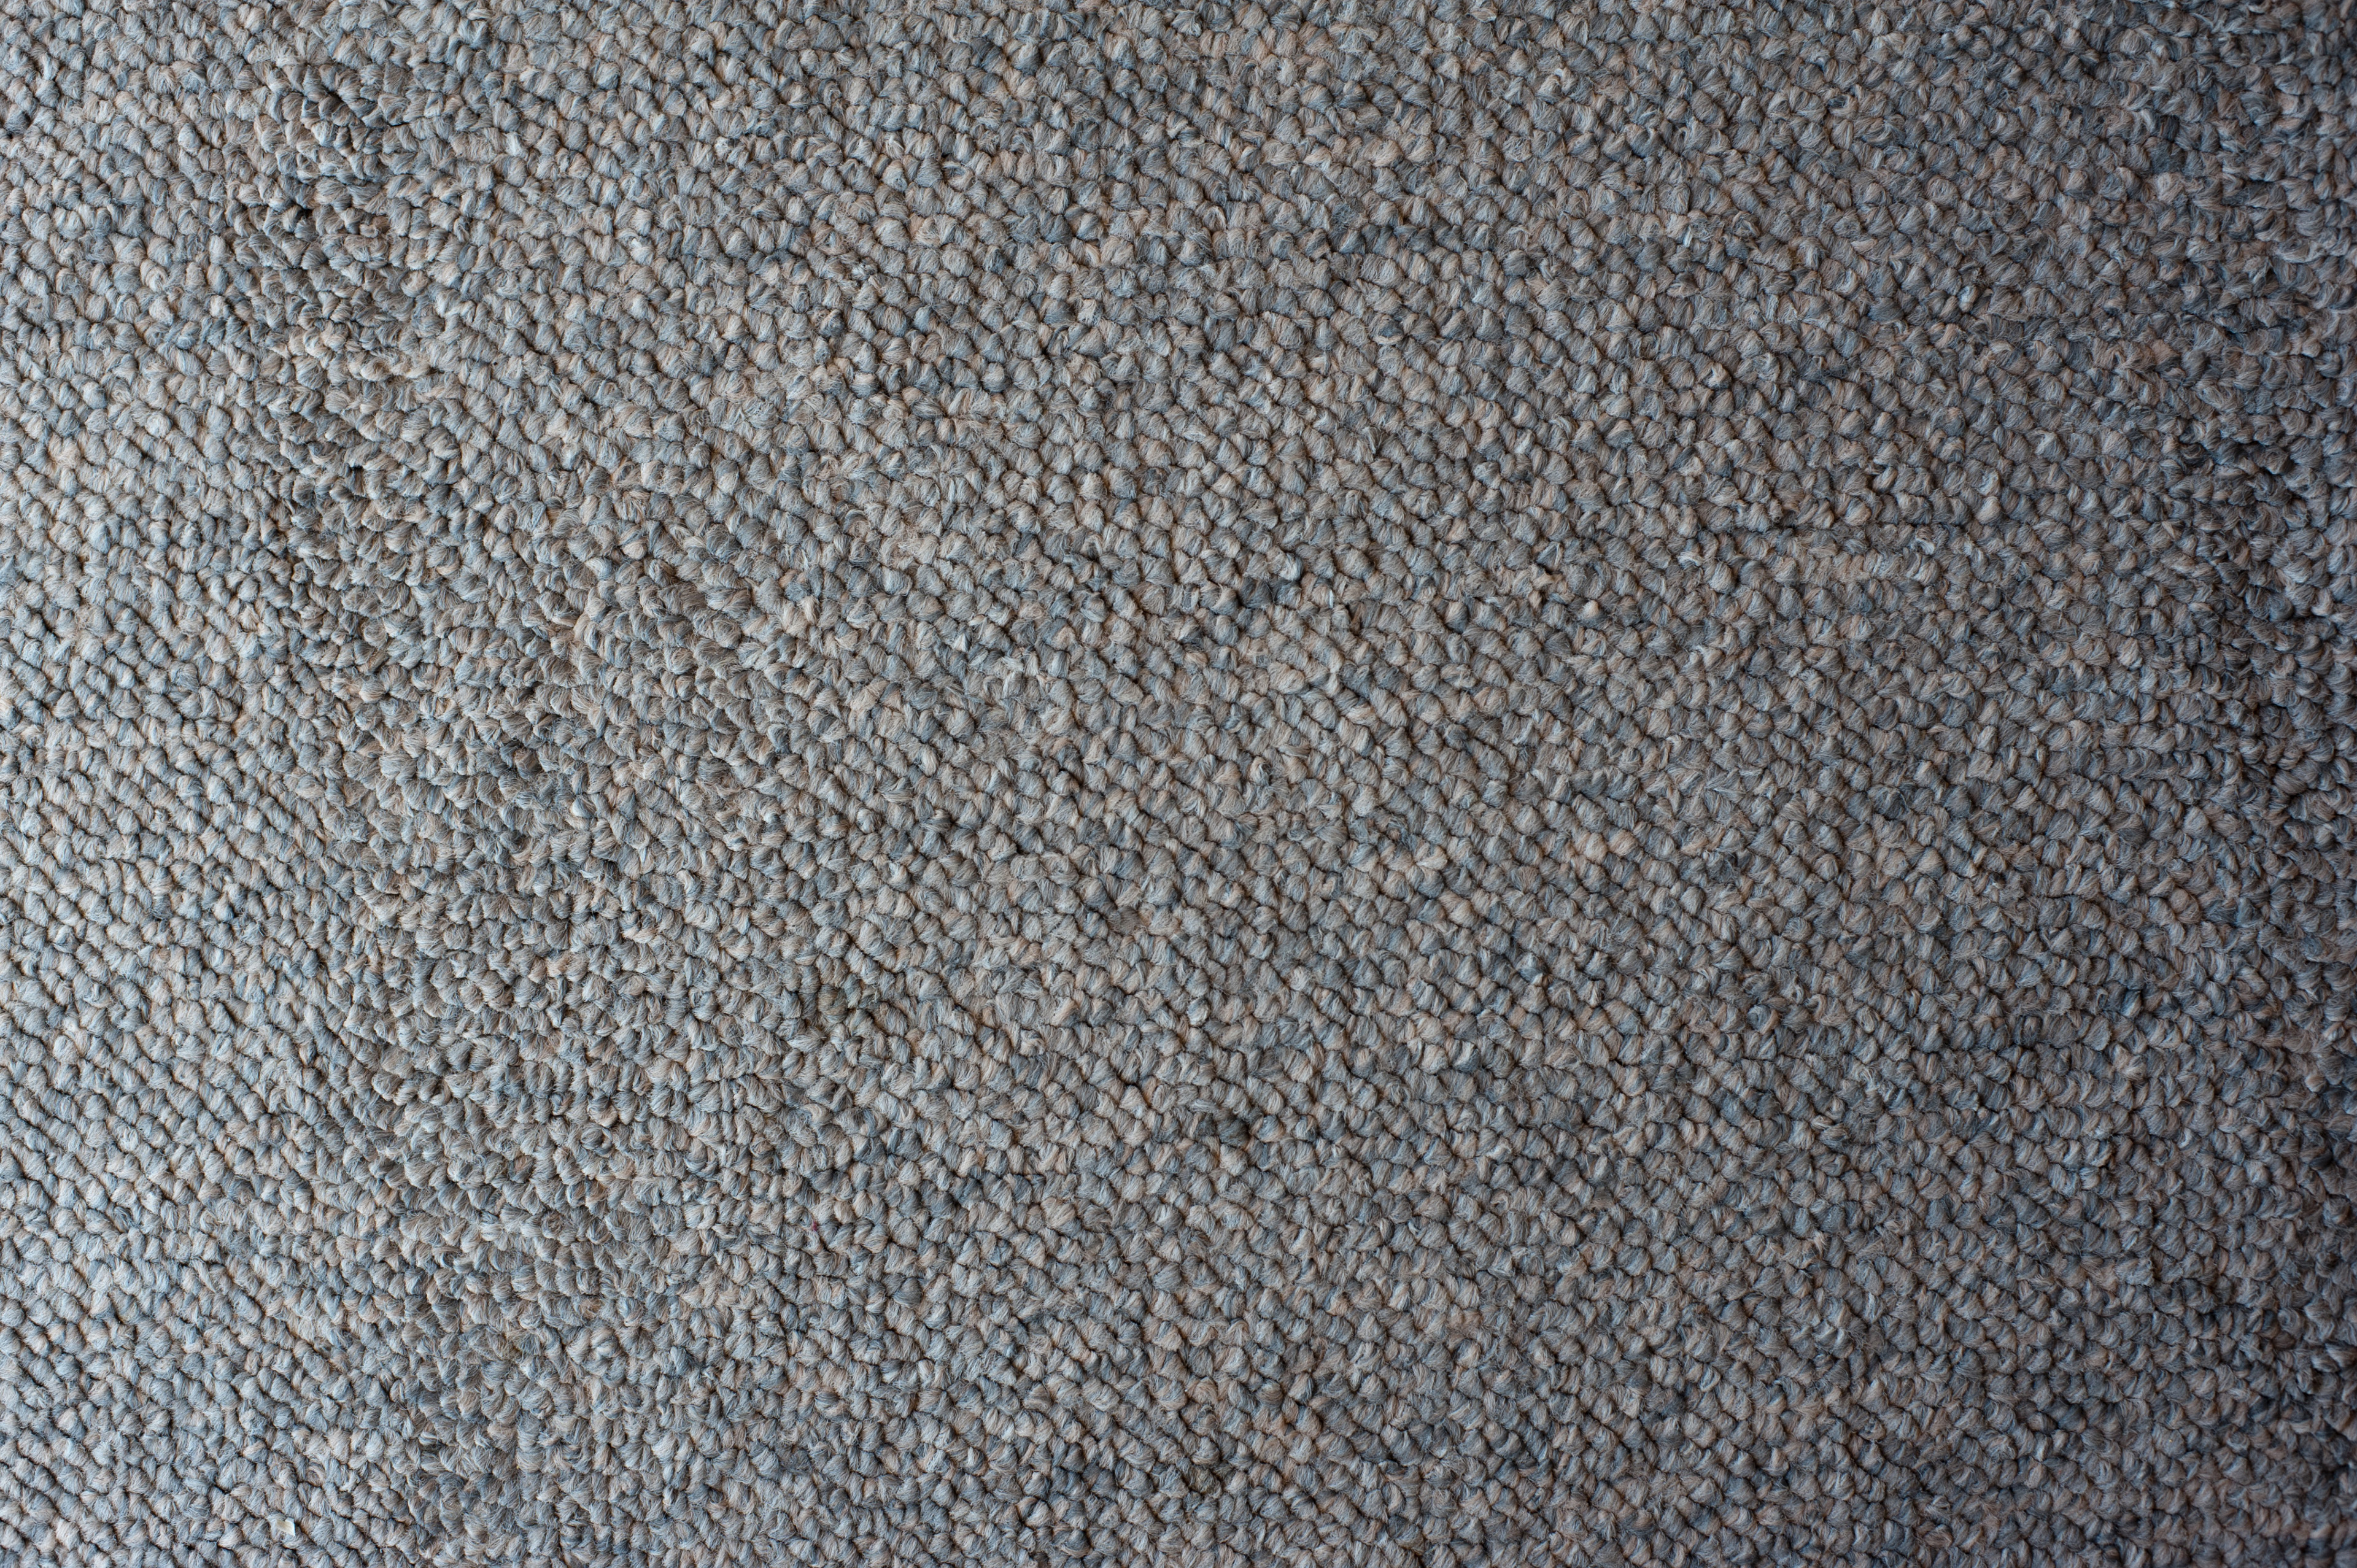 Realistic Carpet Texture